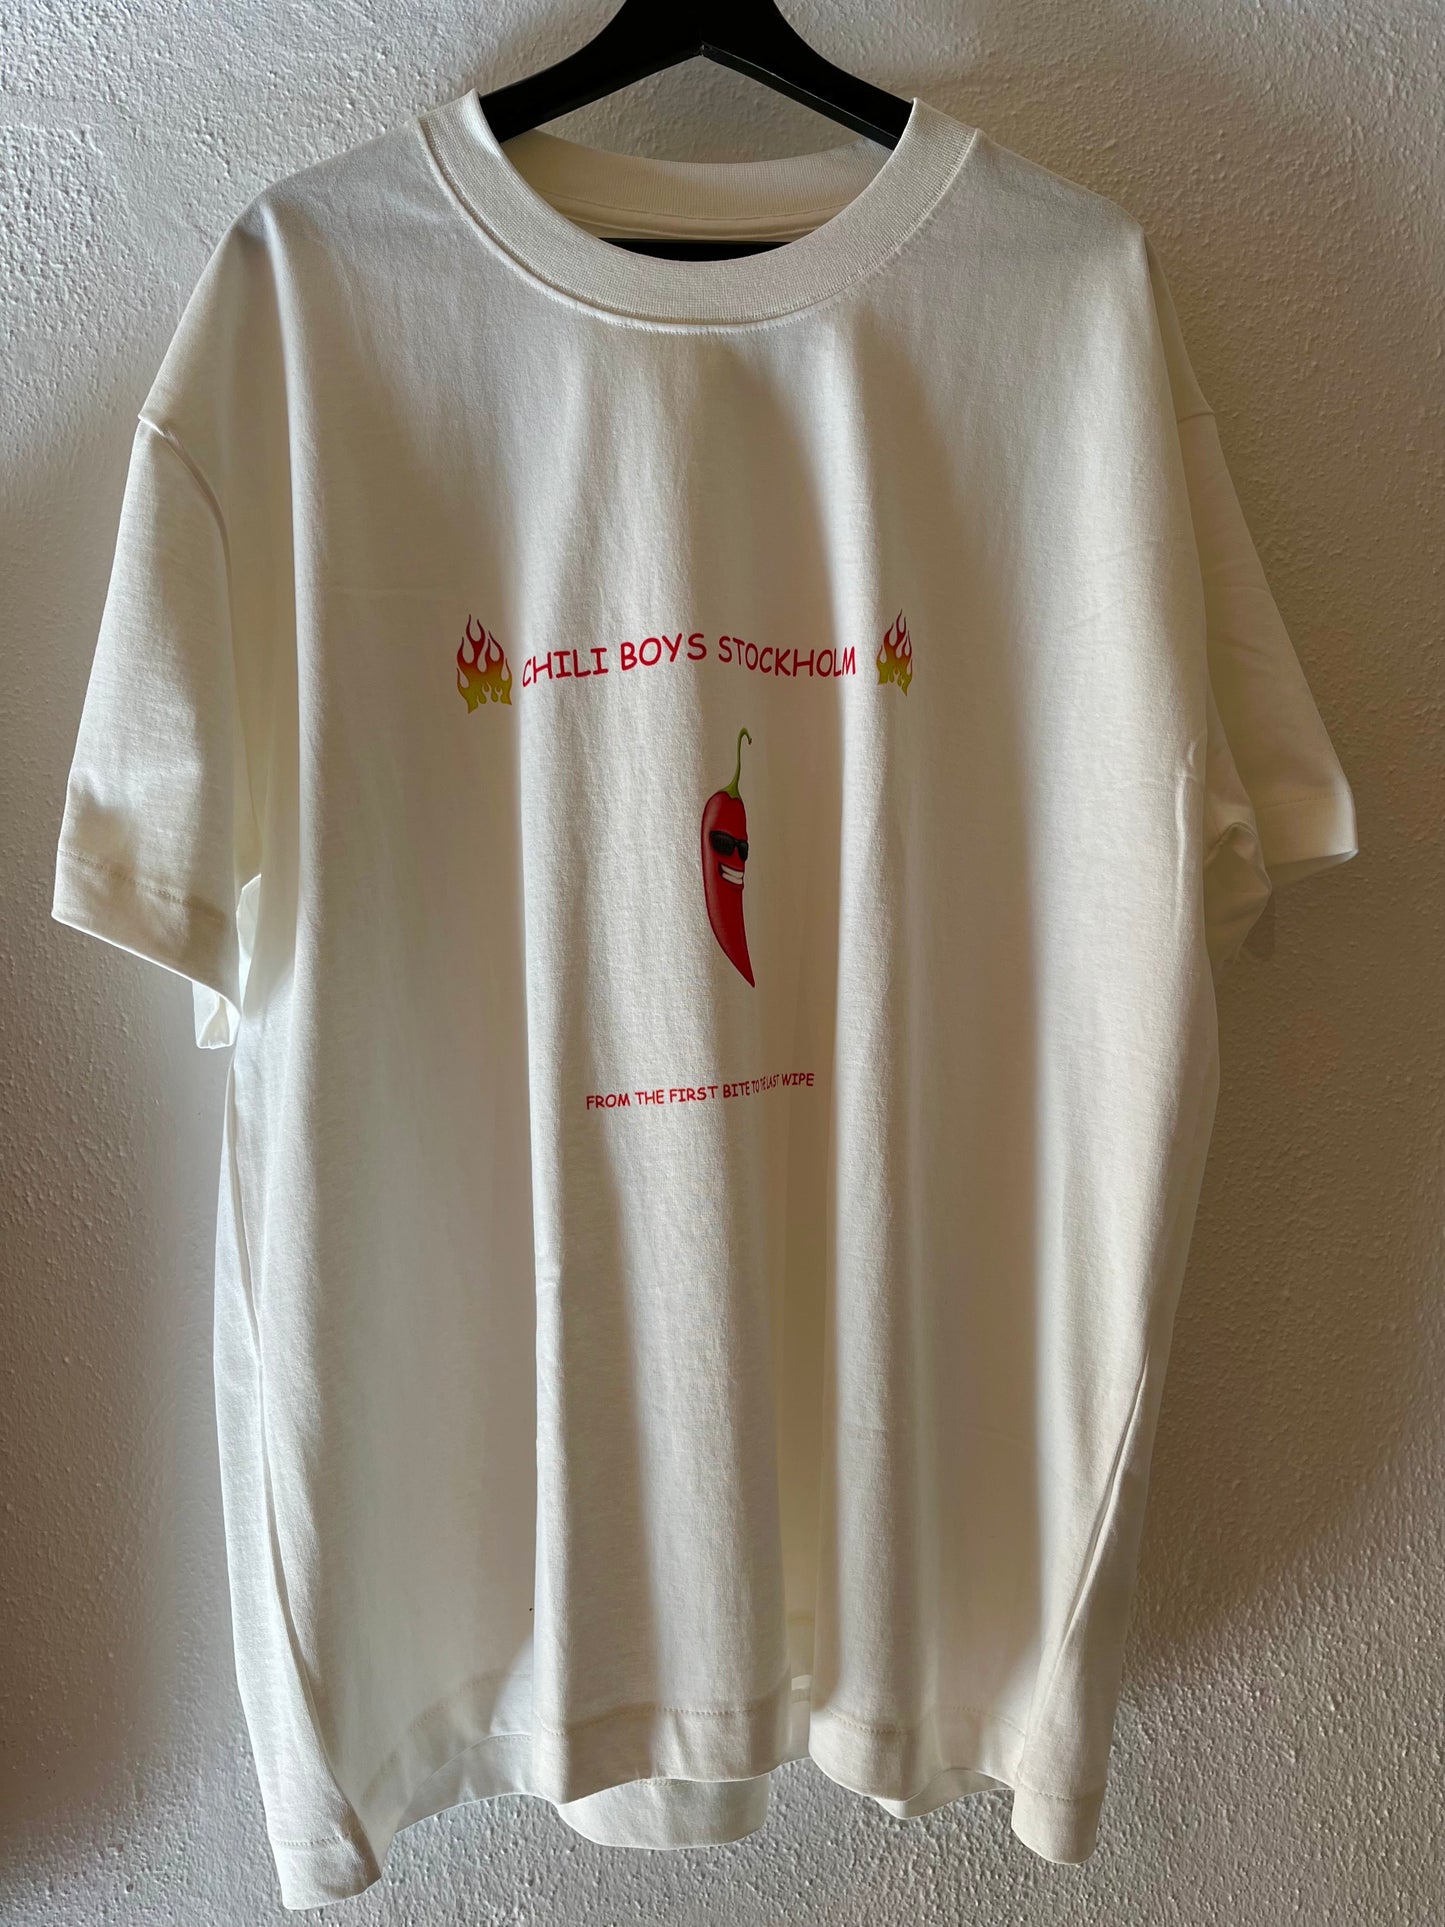 Chili Boys Stockholm T-shirt